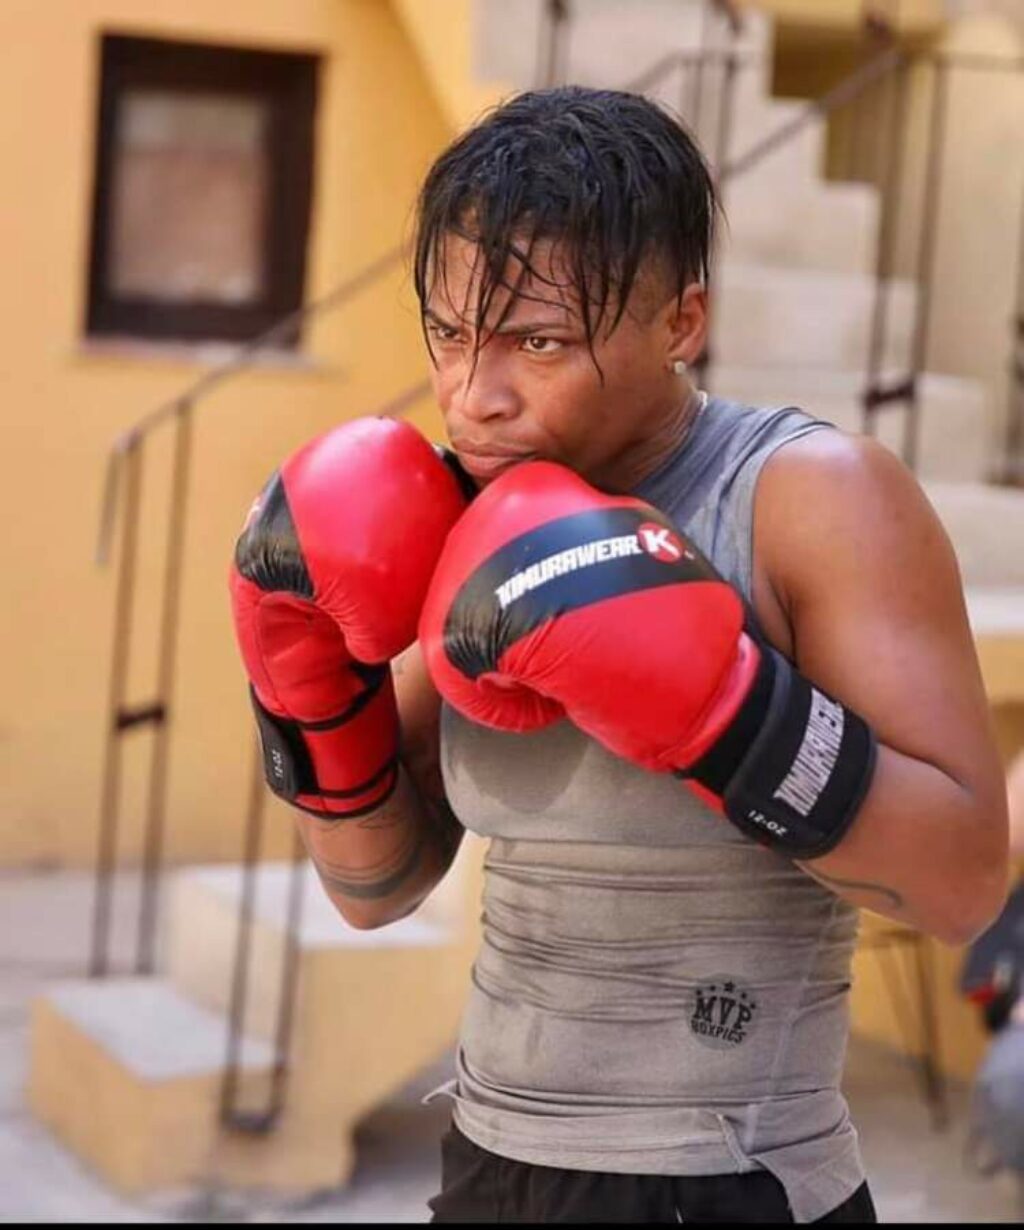 La boxeadora cubana Namibia Flores mostrando sus puños en posición de ataque.